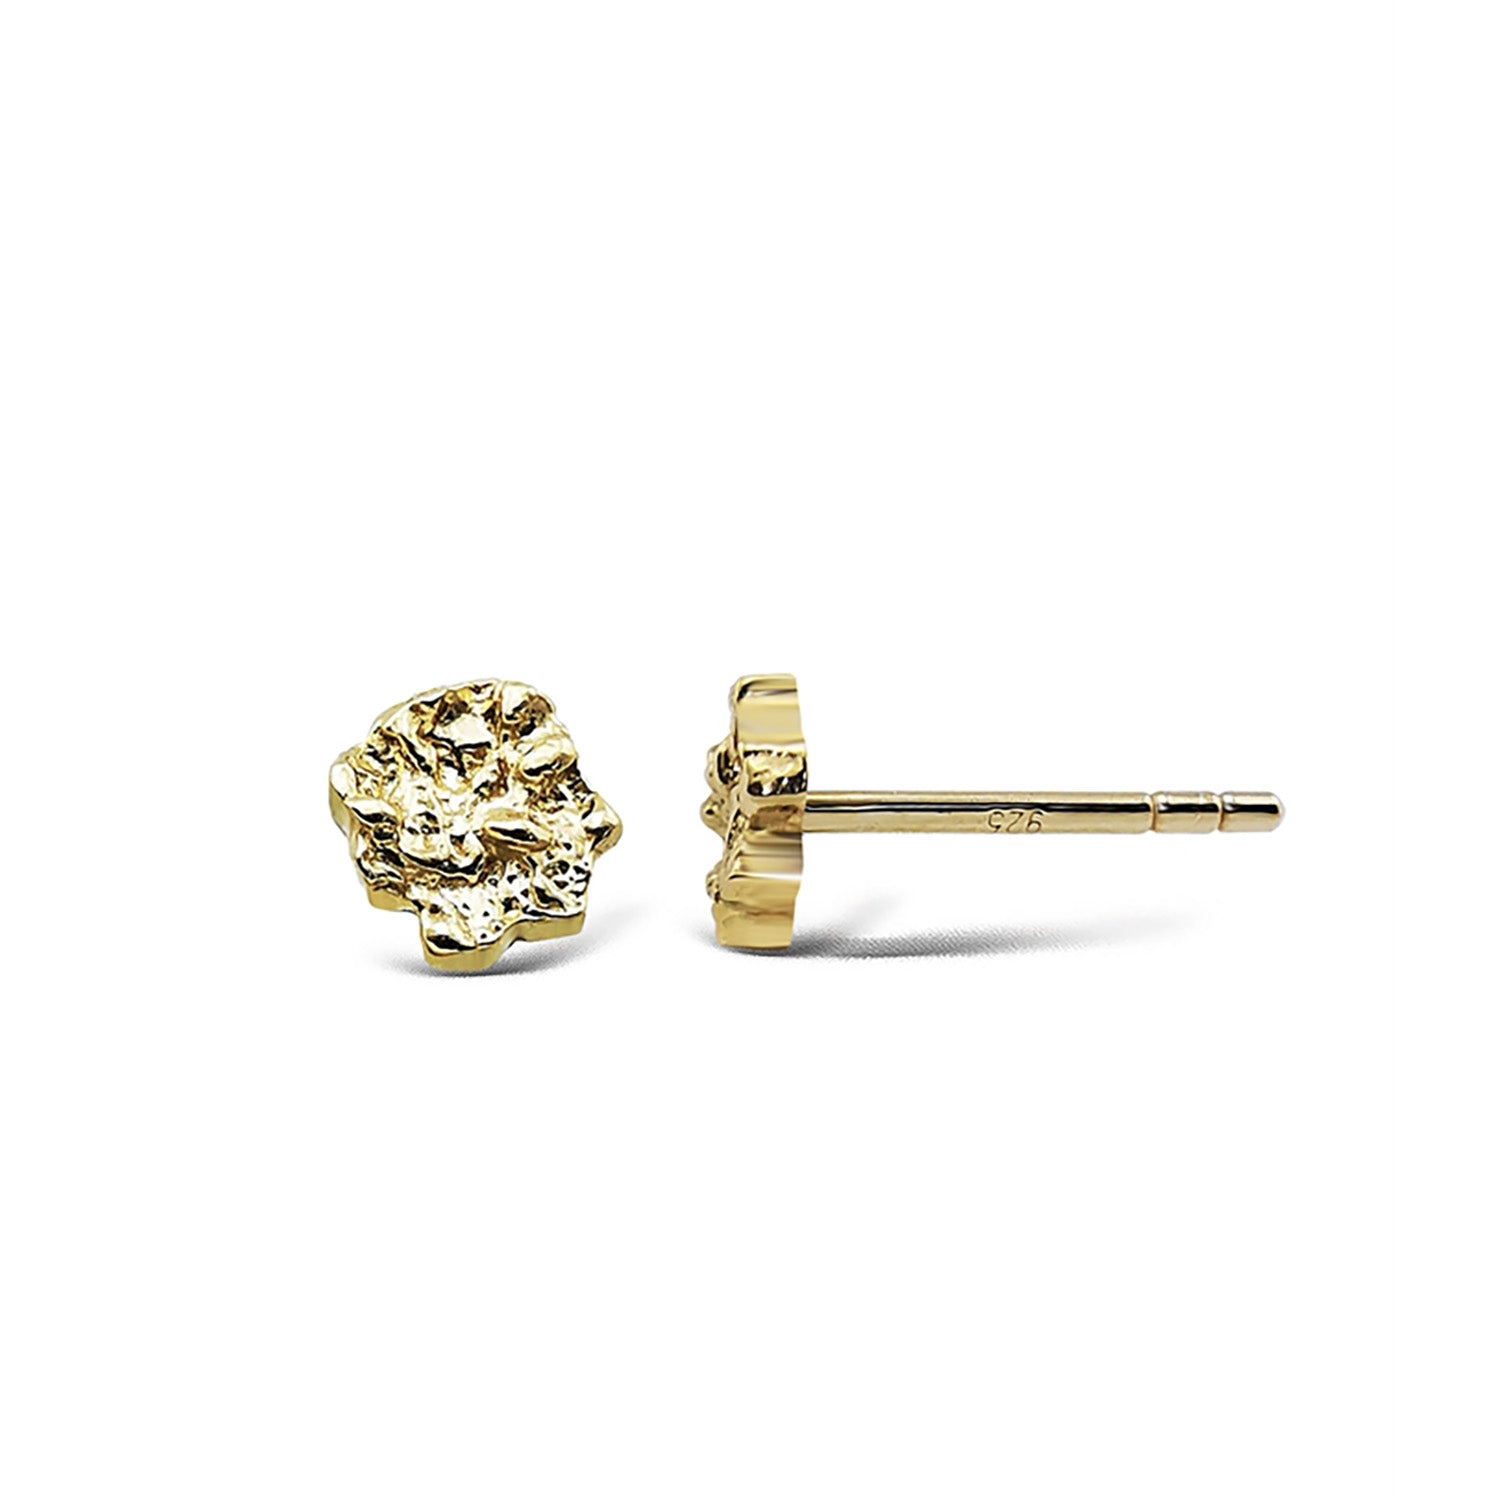 Se Jeberg Jewellery - I Am Gold Dainty ørestikker 51980 Forgyldt sterlingsølv hos Vibholm.dk